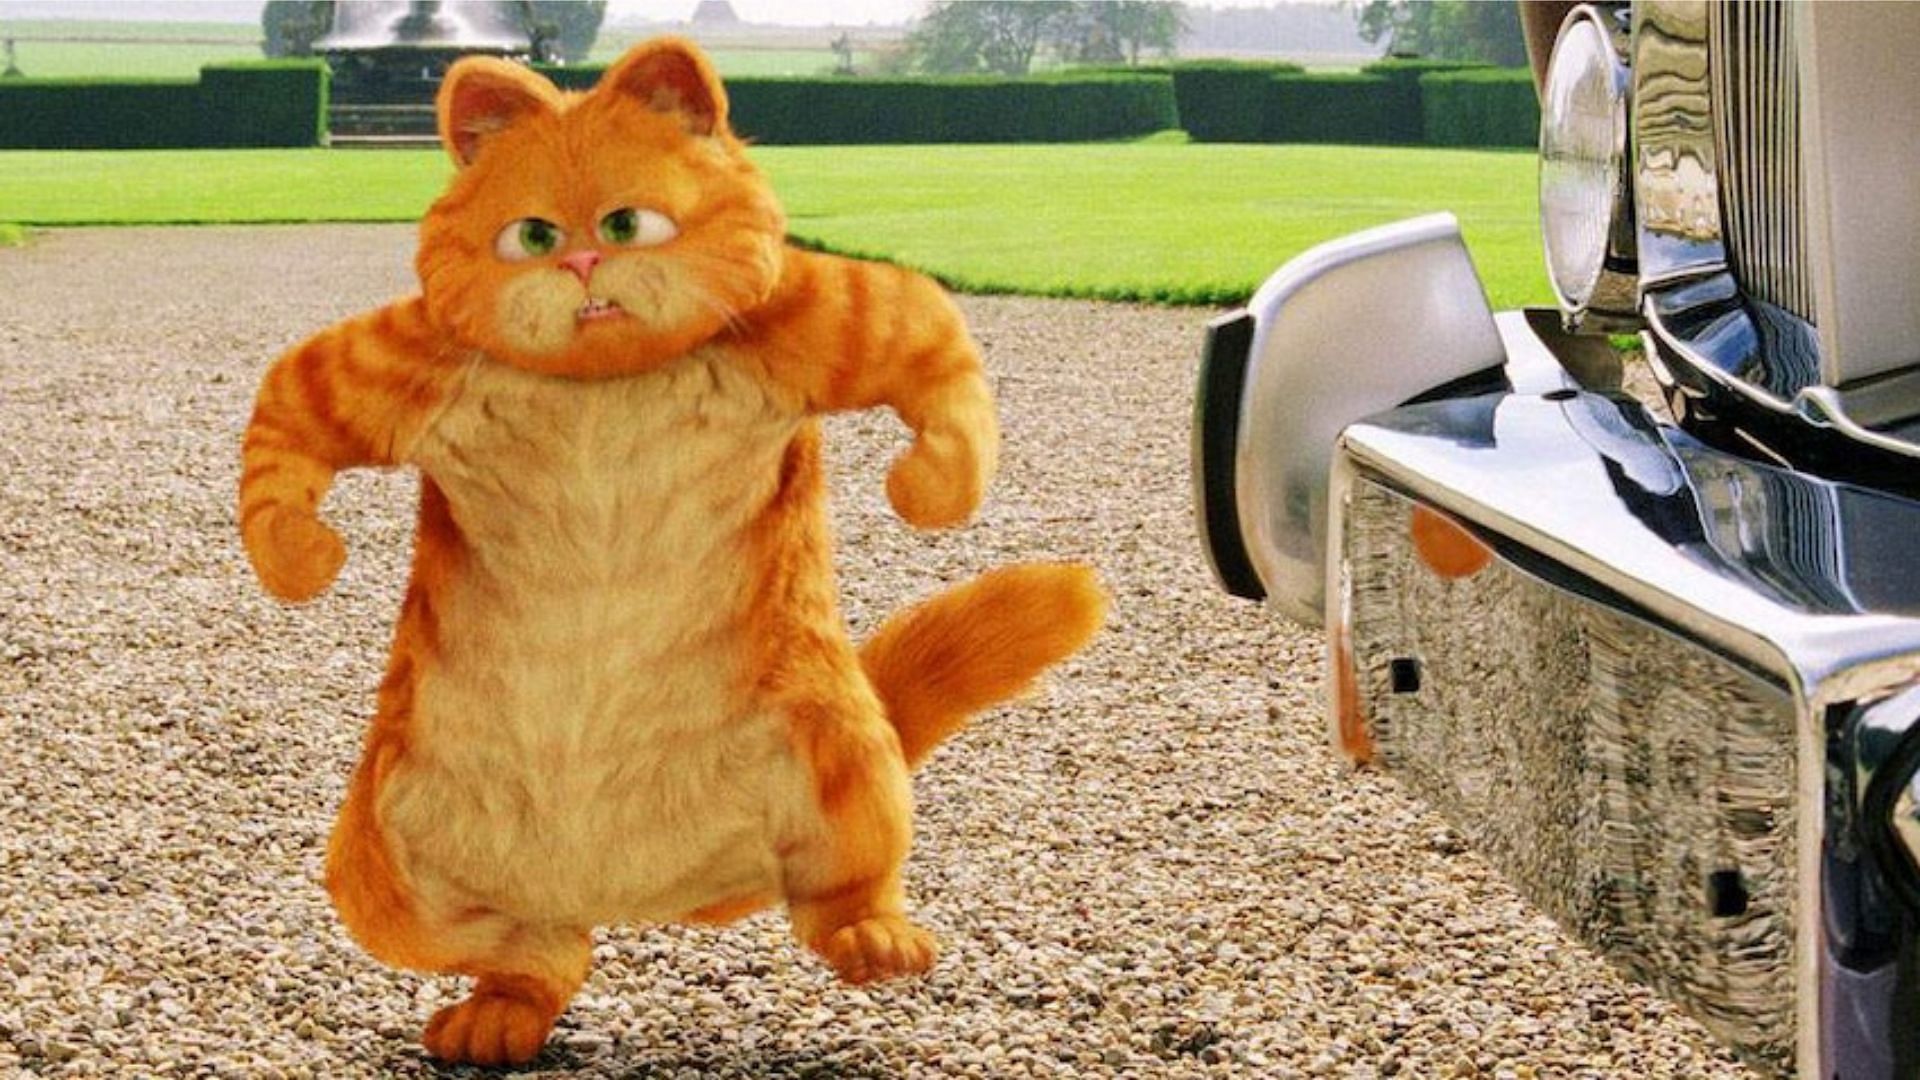 Garfield (Image via Empire Online)